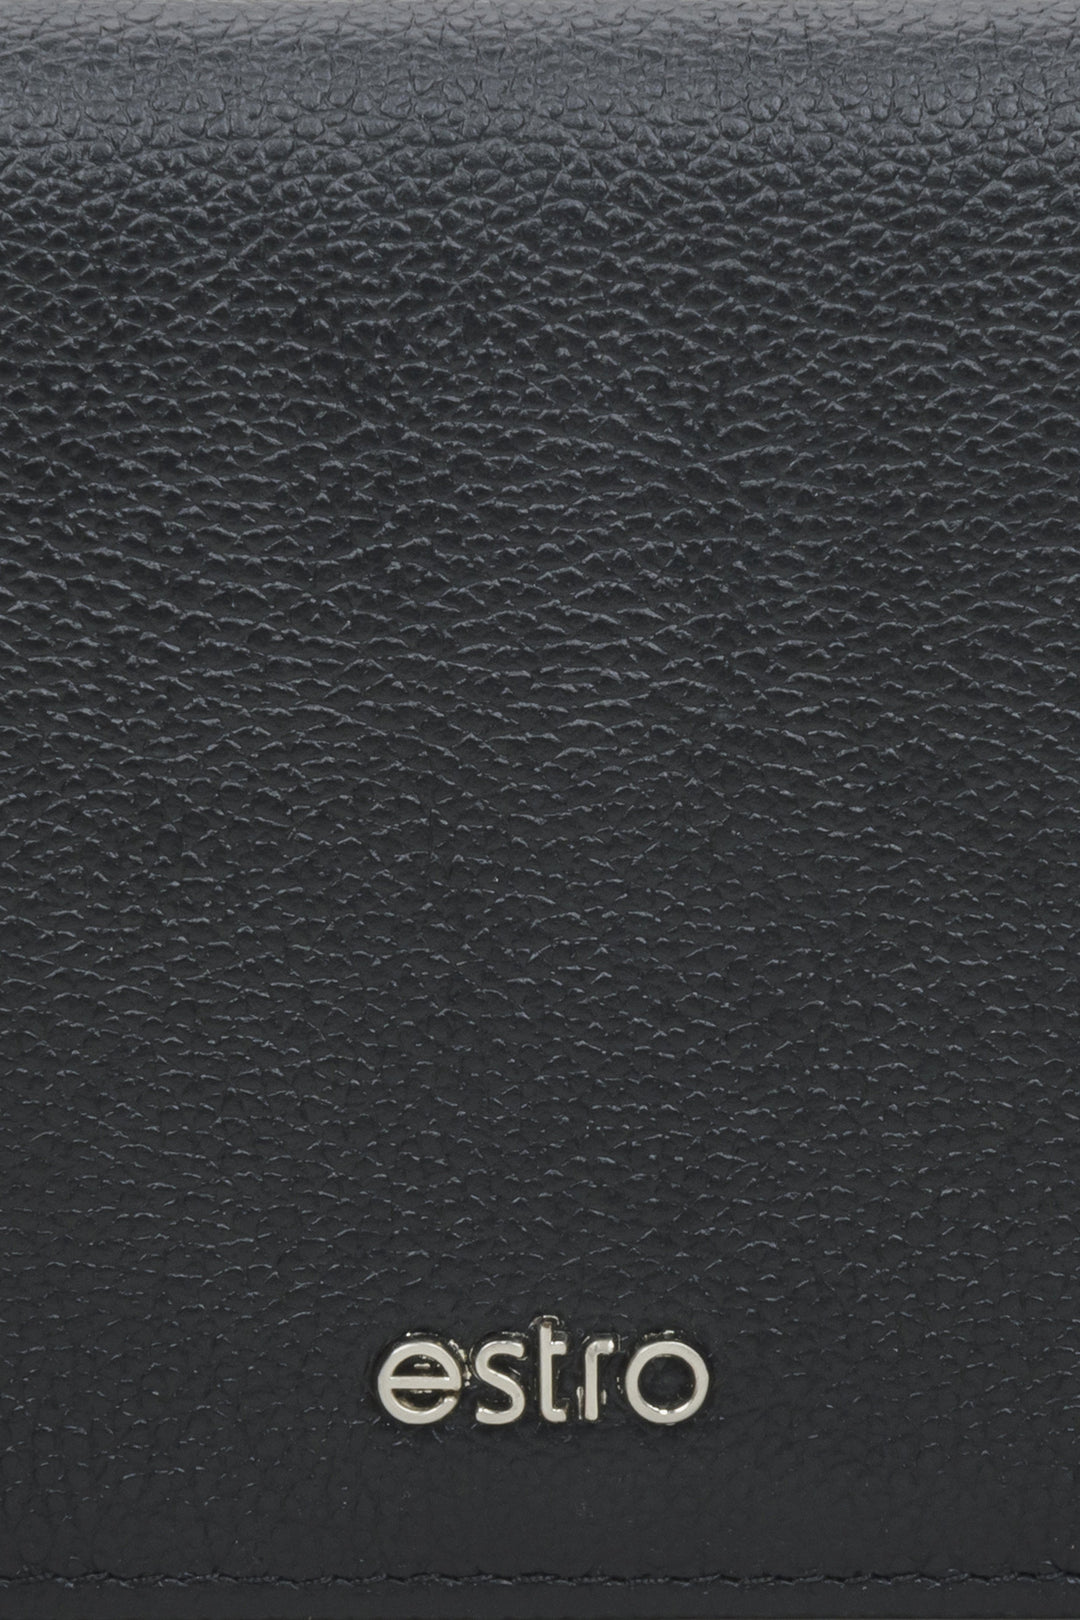 Estro men's large black wallet - close-up on details.